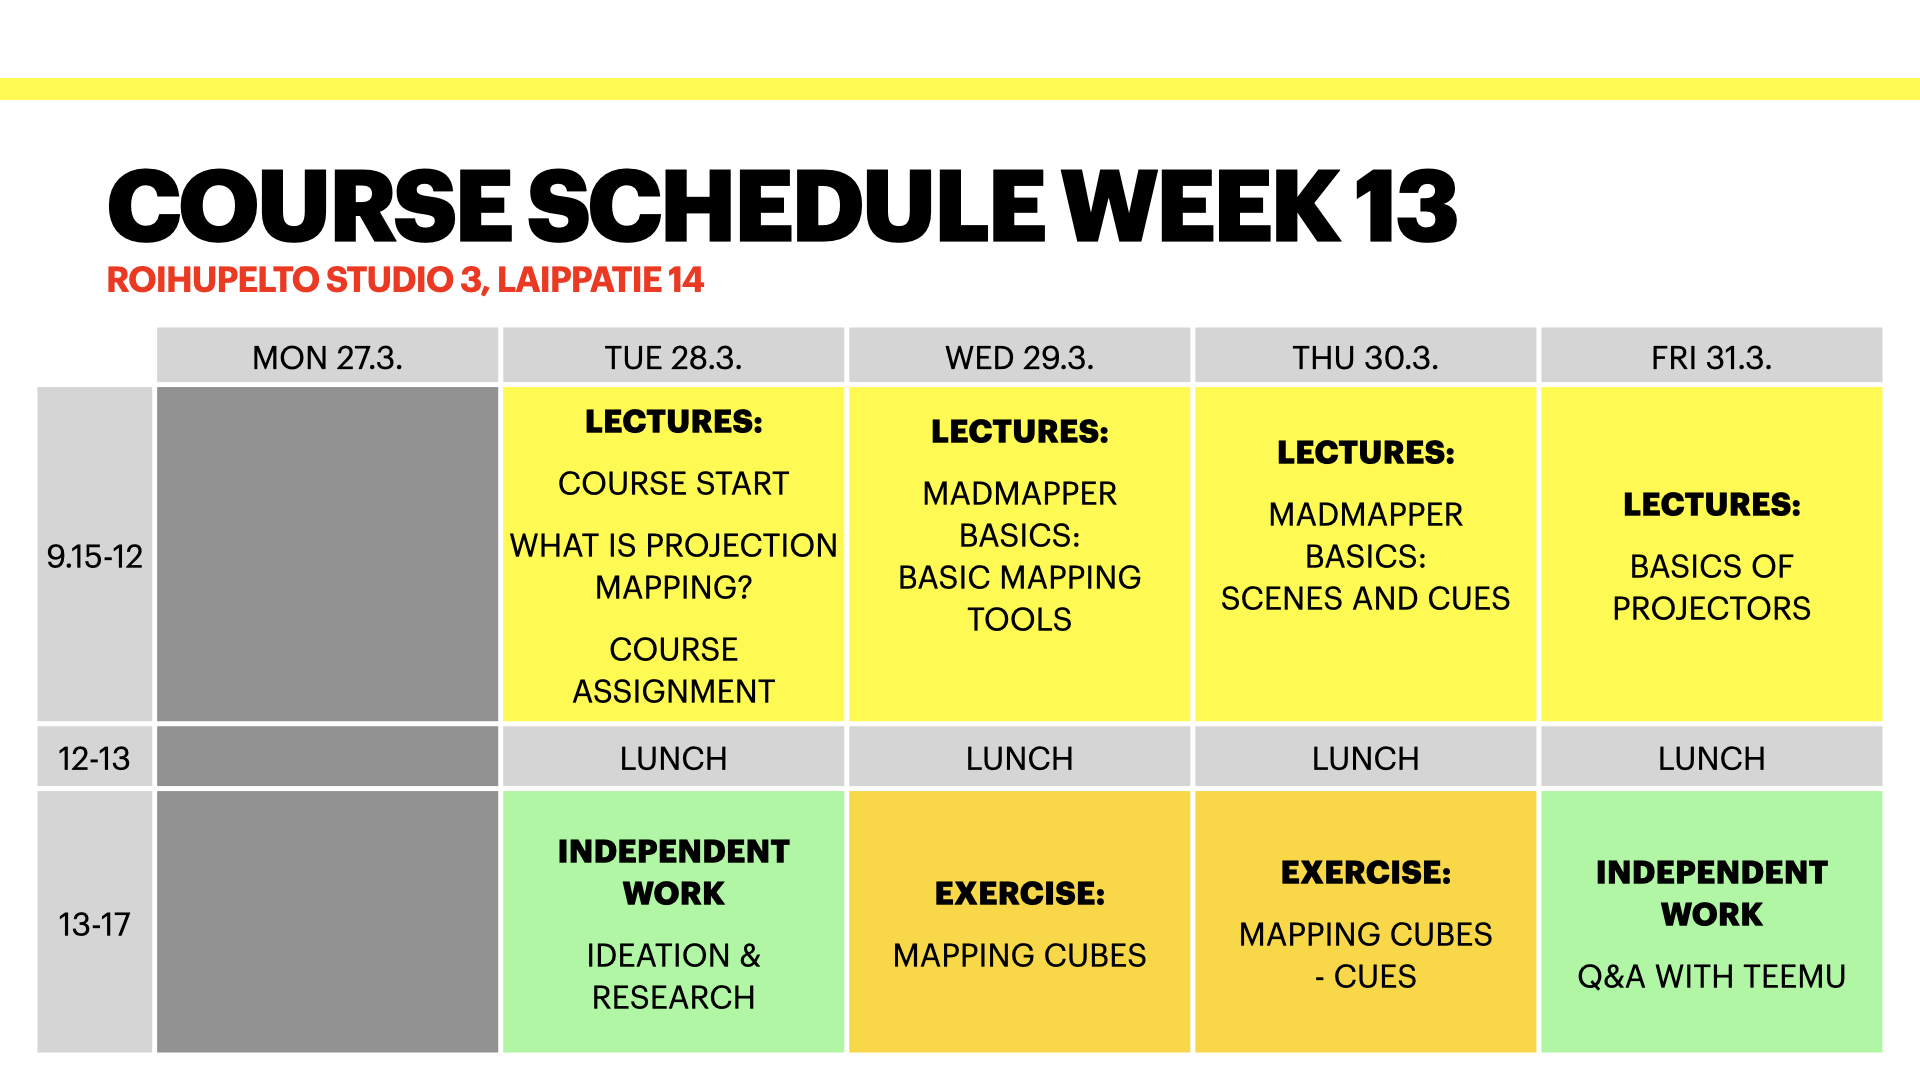 Course schedule week 13